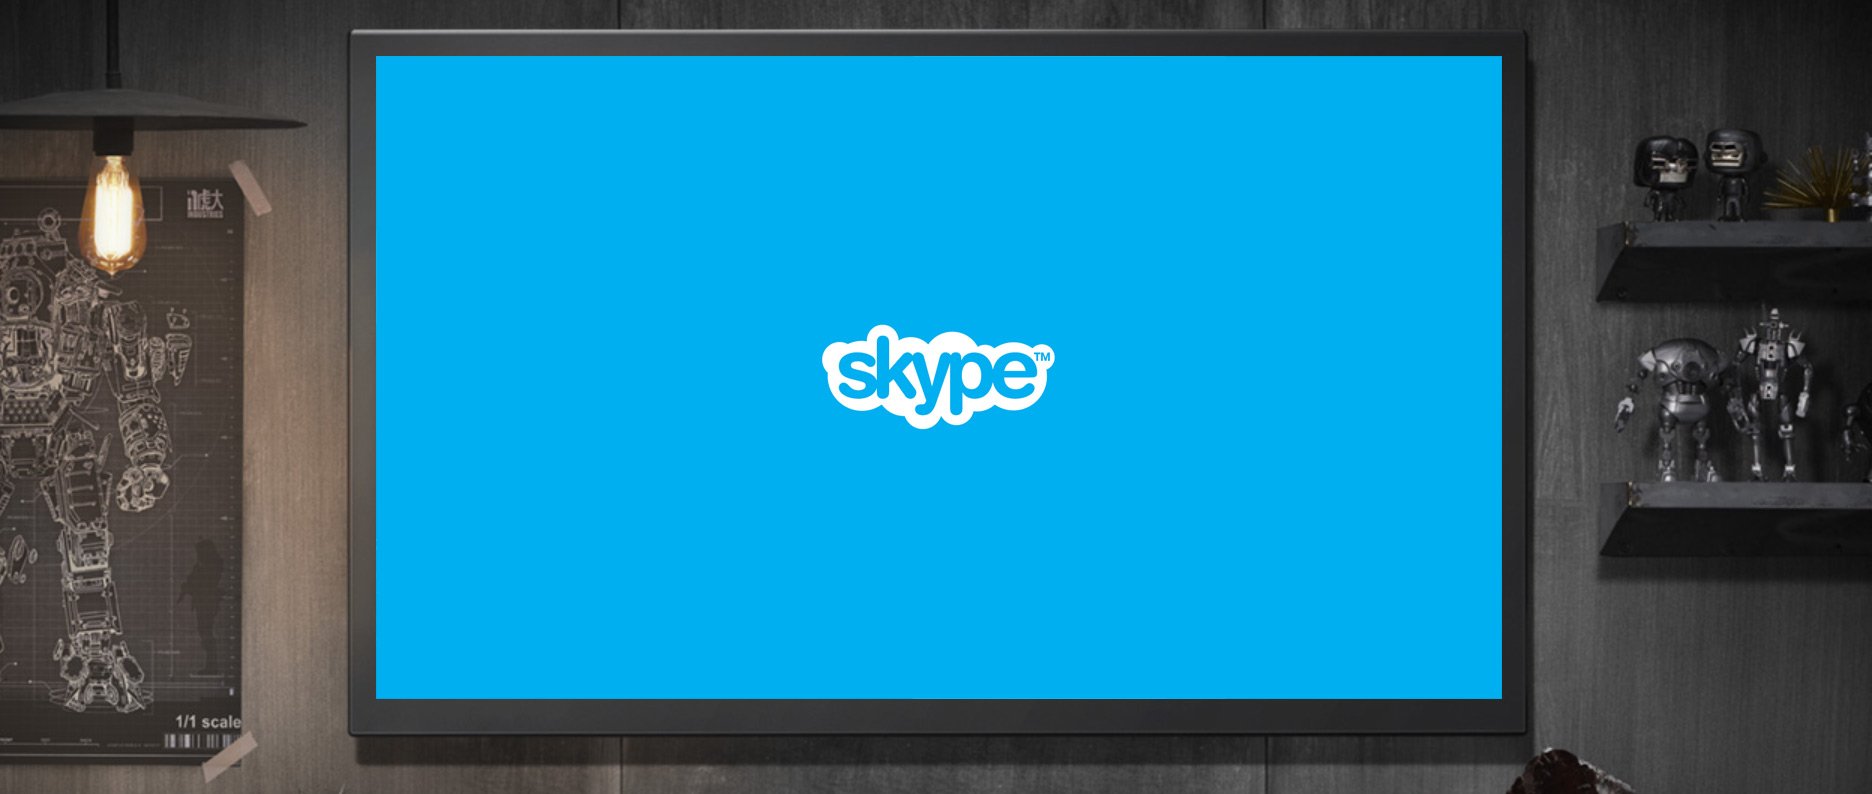 Skype_Xbox_One.jpg